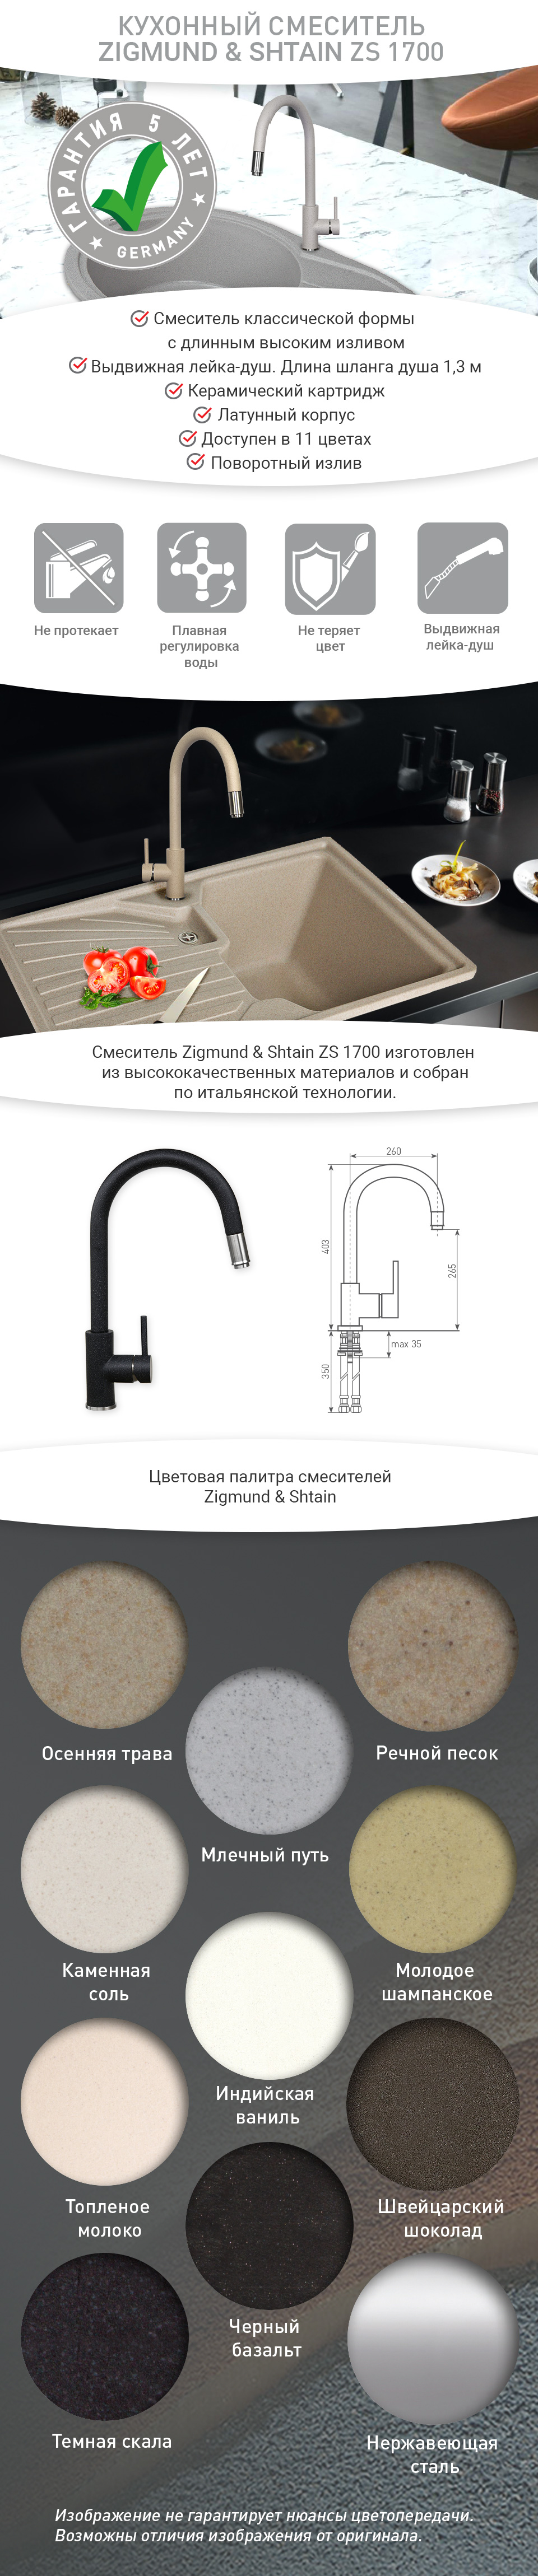 Смеситель Zigmund & Shtain ZS 1700 Черный базальт